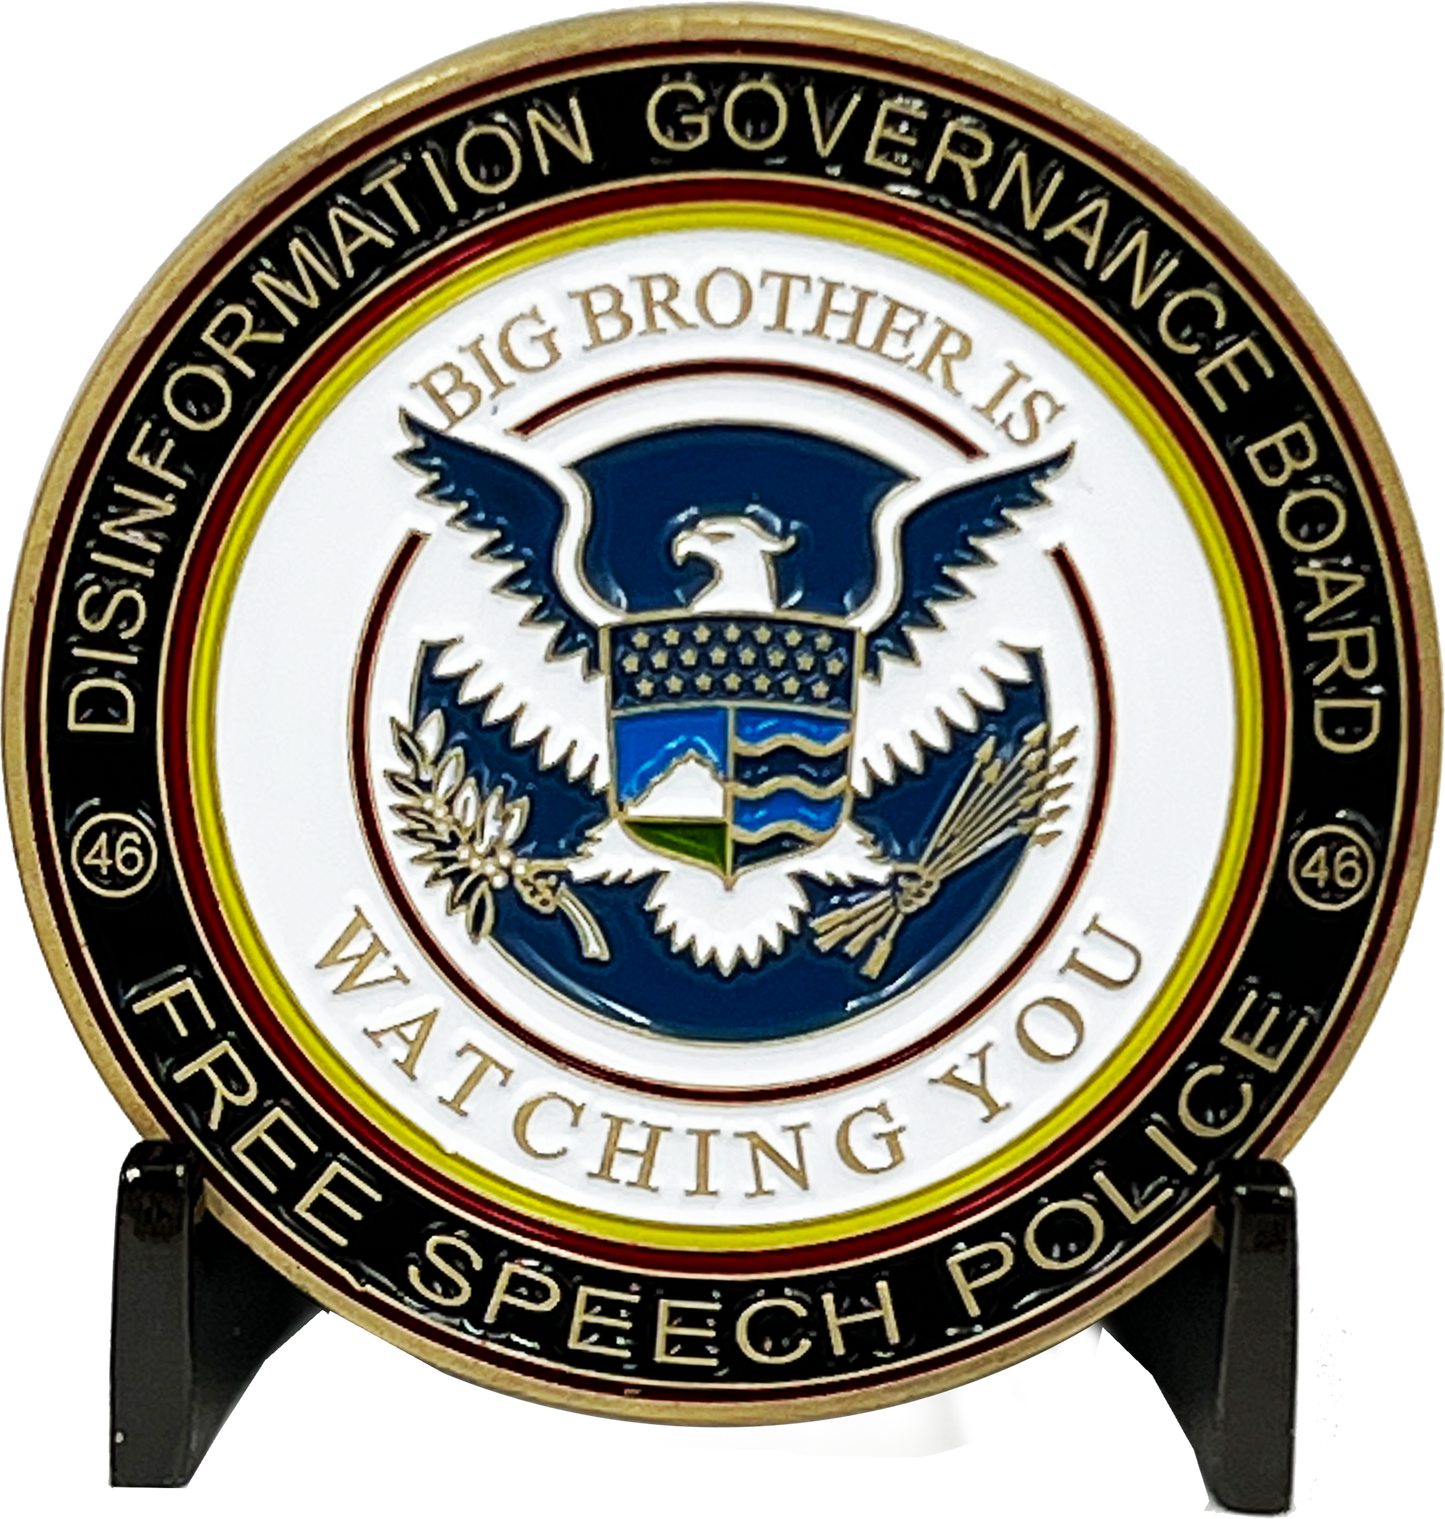 EL12-006 Biden Information Governance Board Free Speech Police Border Patrol CBP Field OPS HSI ICE FBI